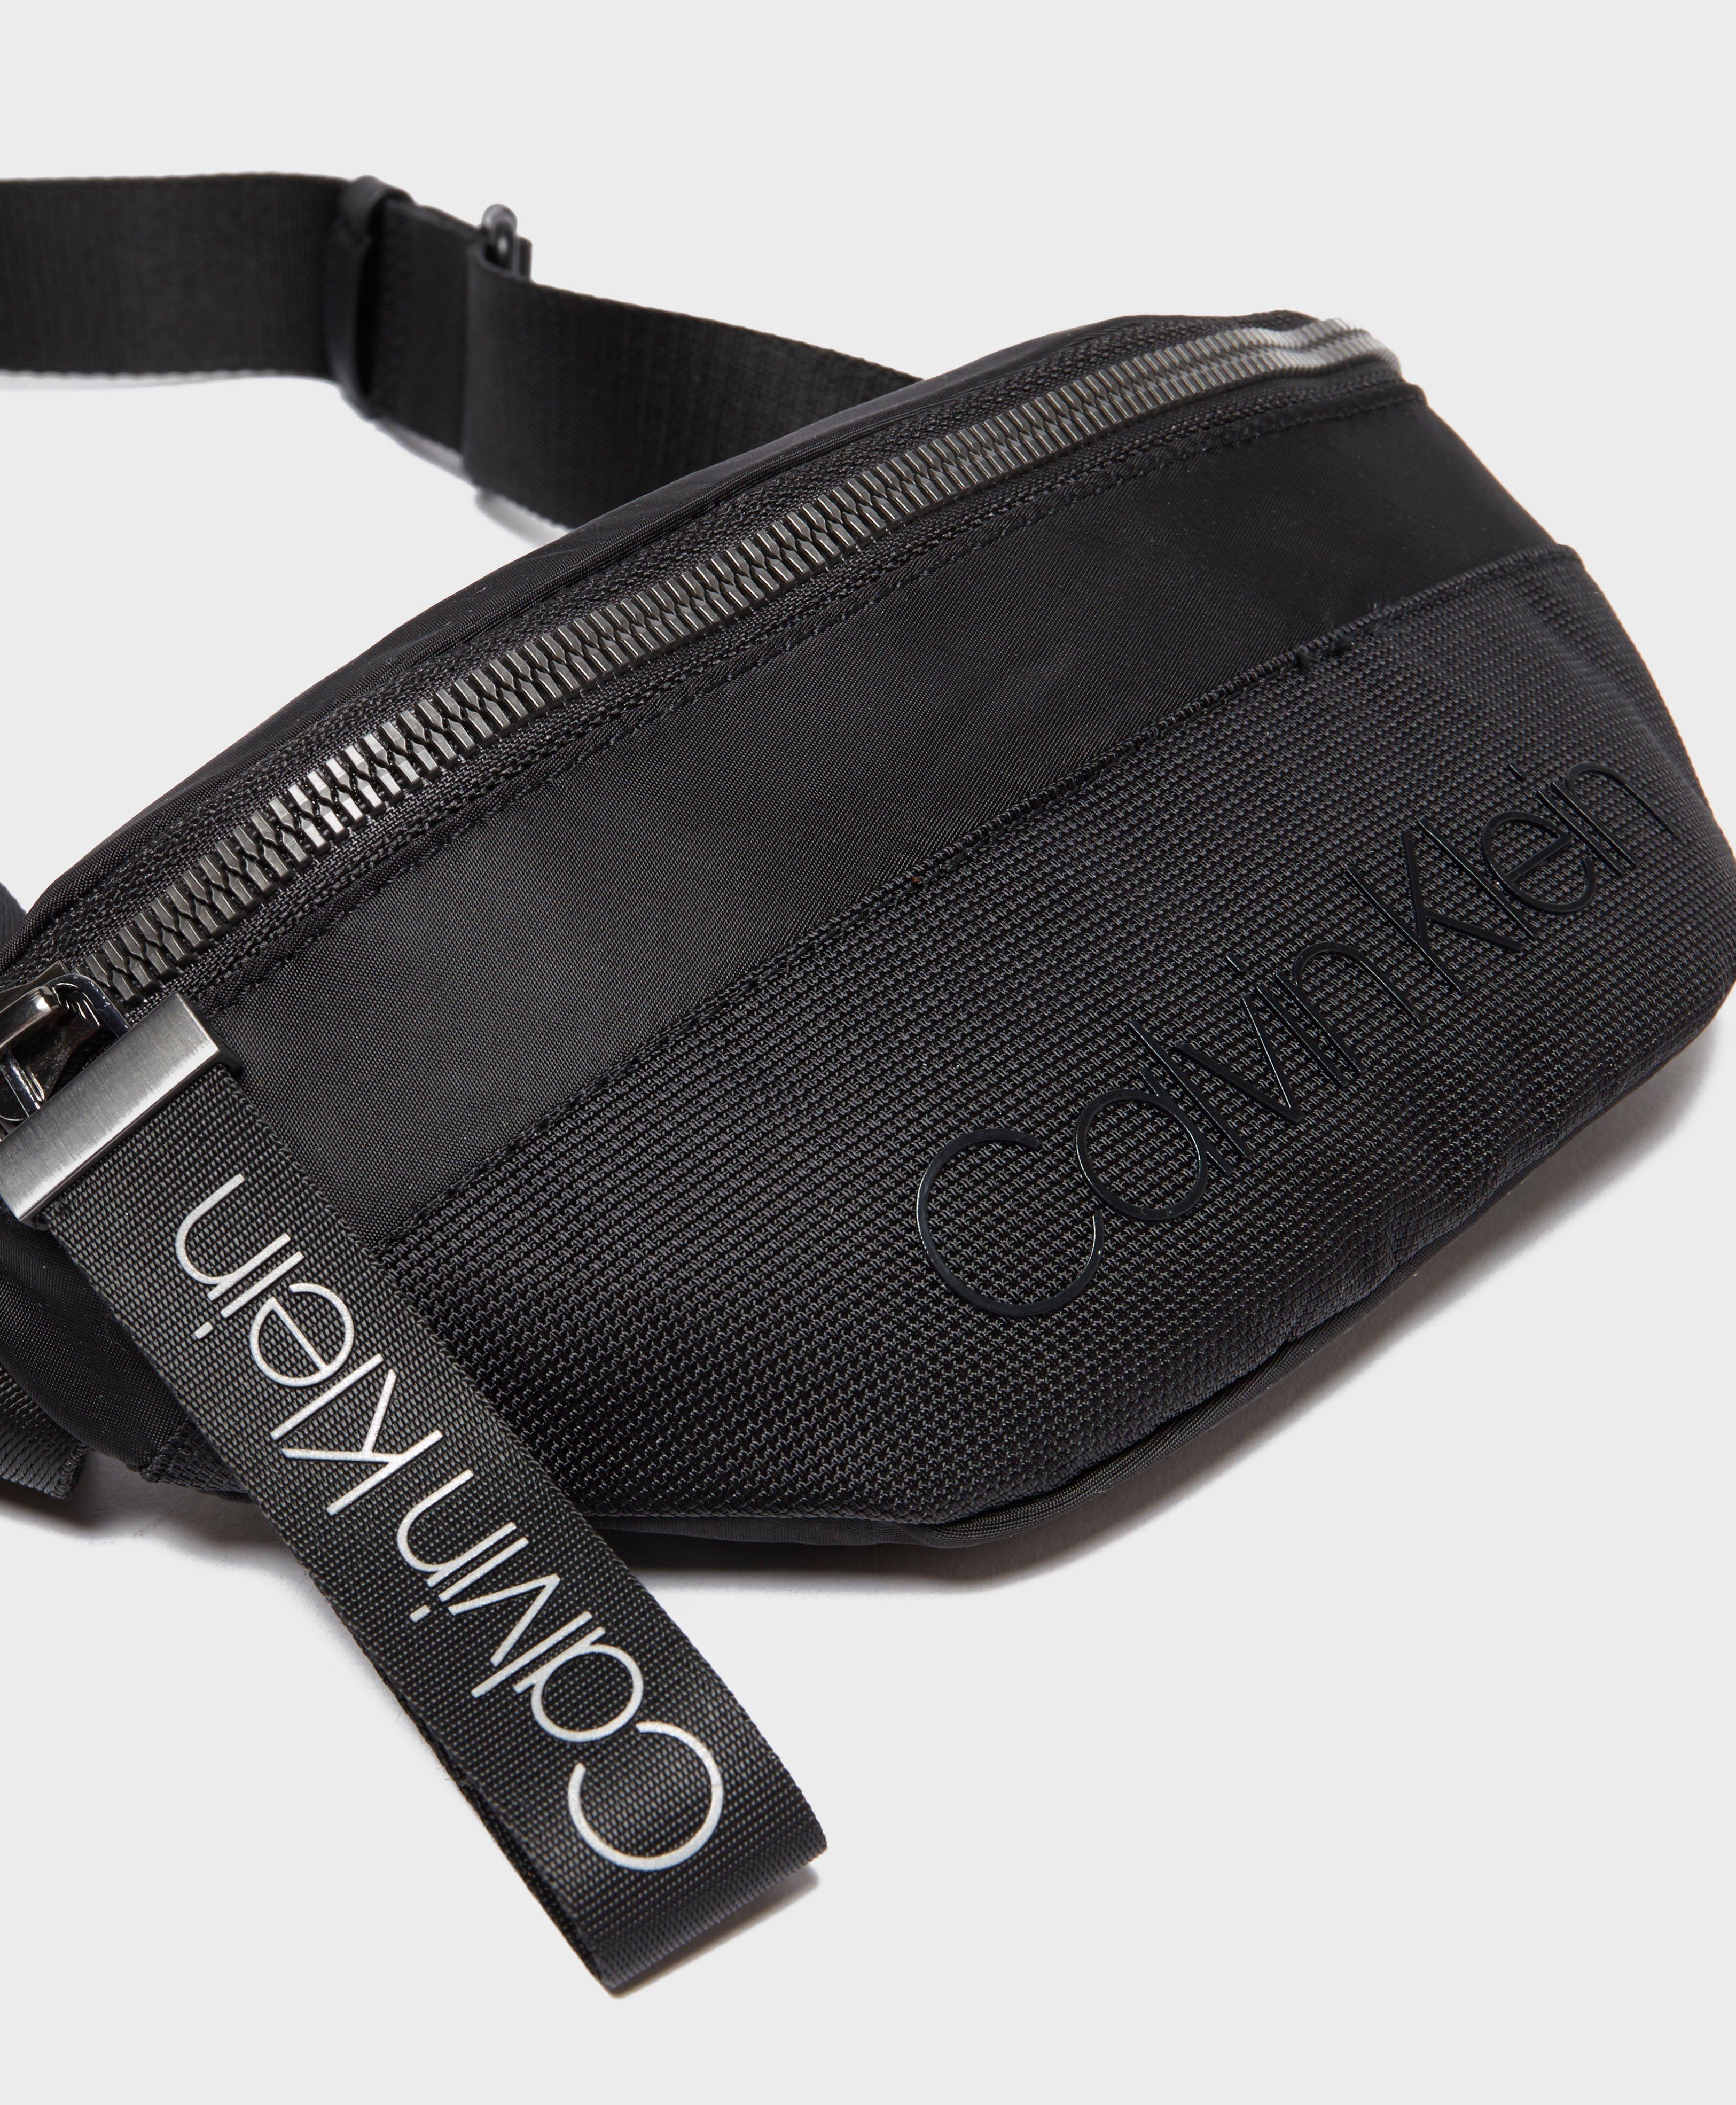 Calvin Klein Synthetic Shadow Bum Bag in Black for Men - Lyst